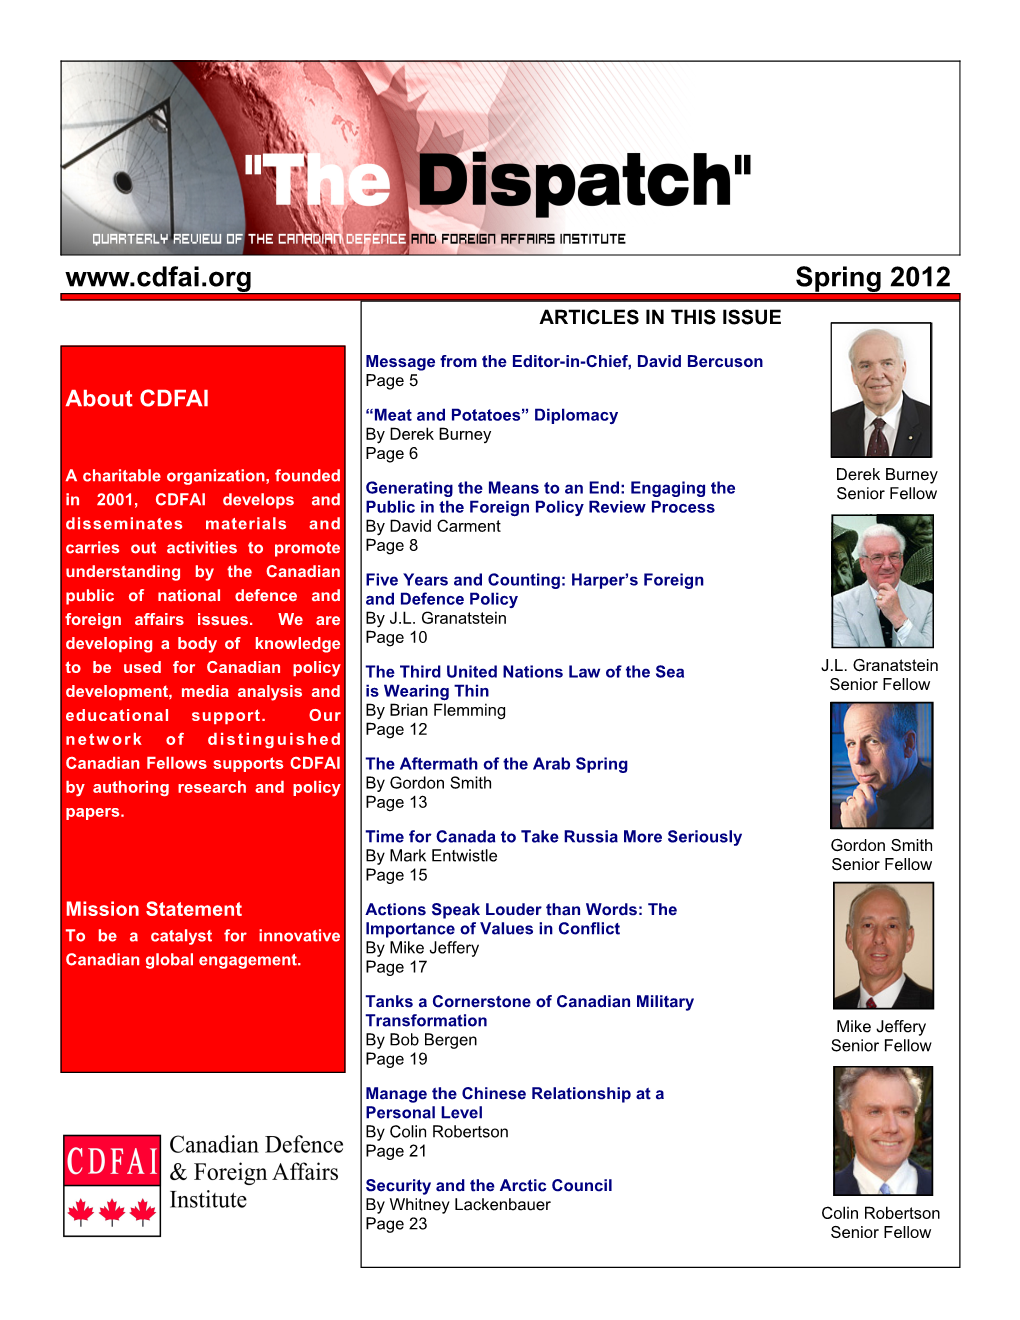 Spring 2012 Dispatch